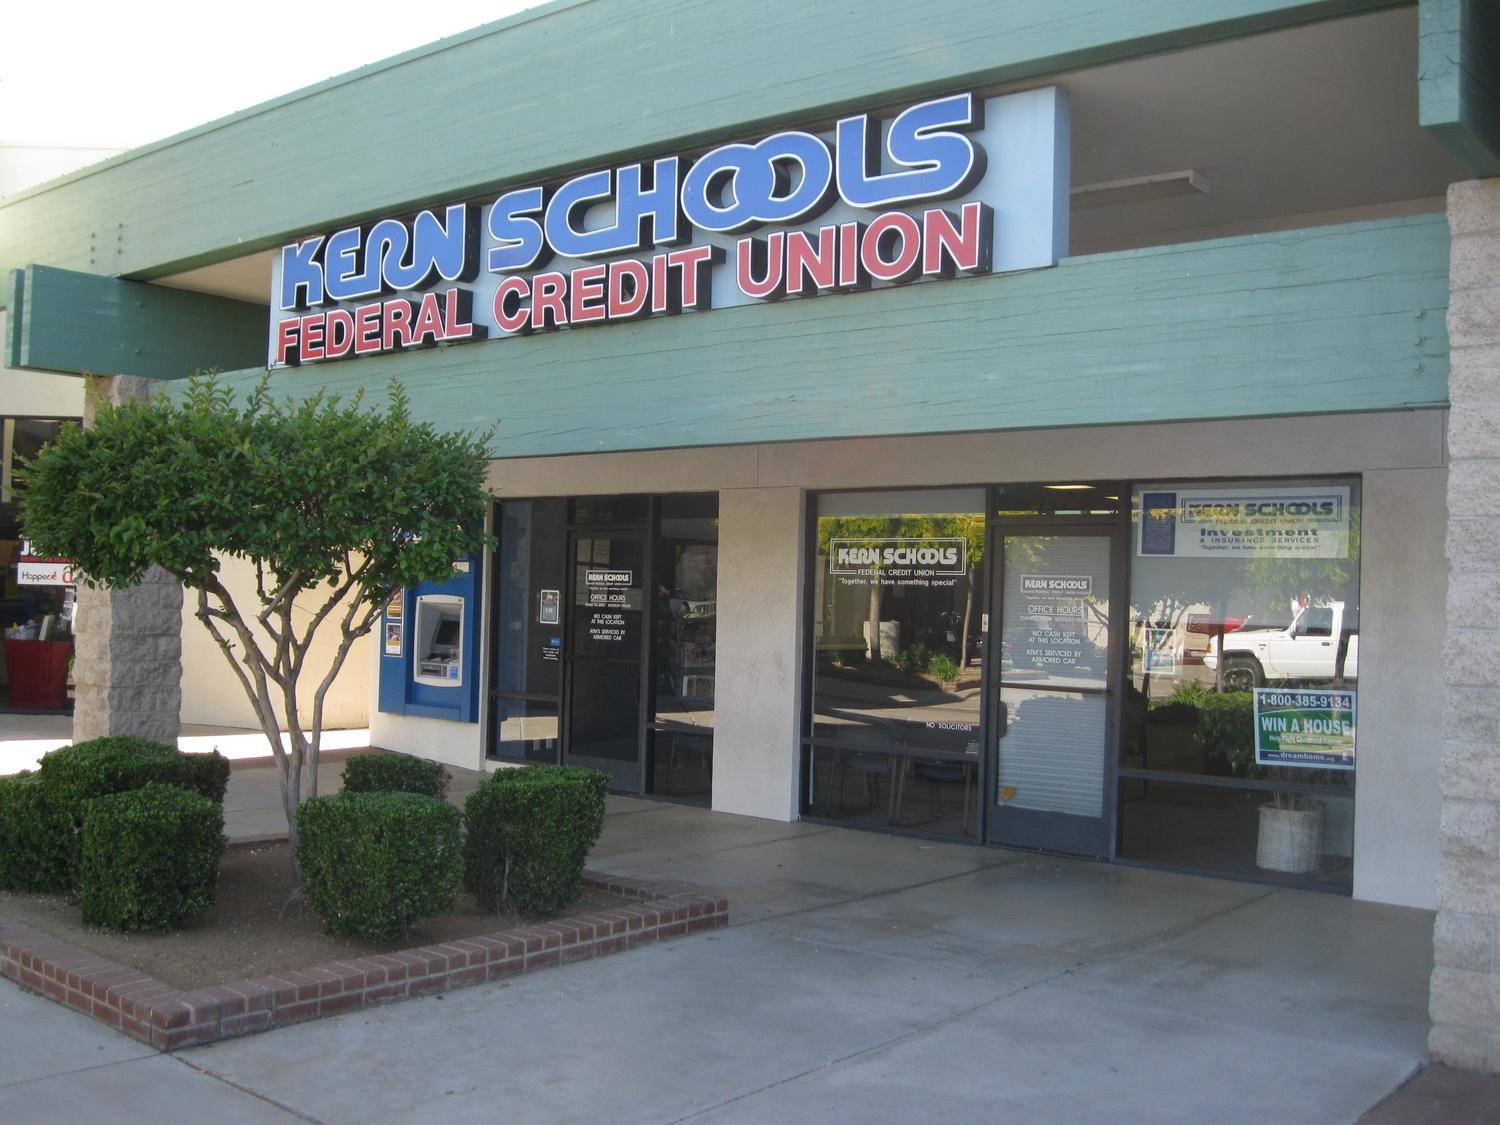 Kern schools federal credit union jobs